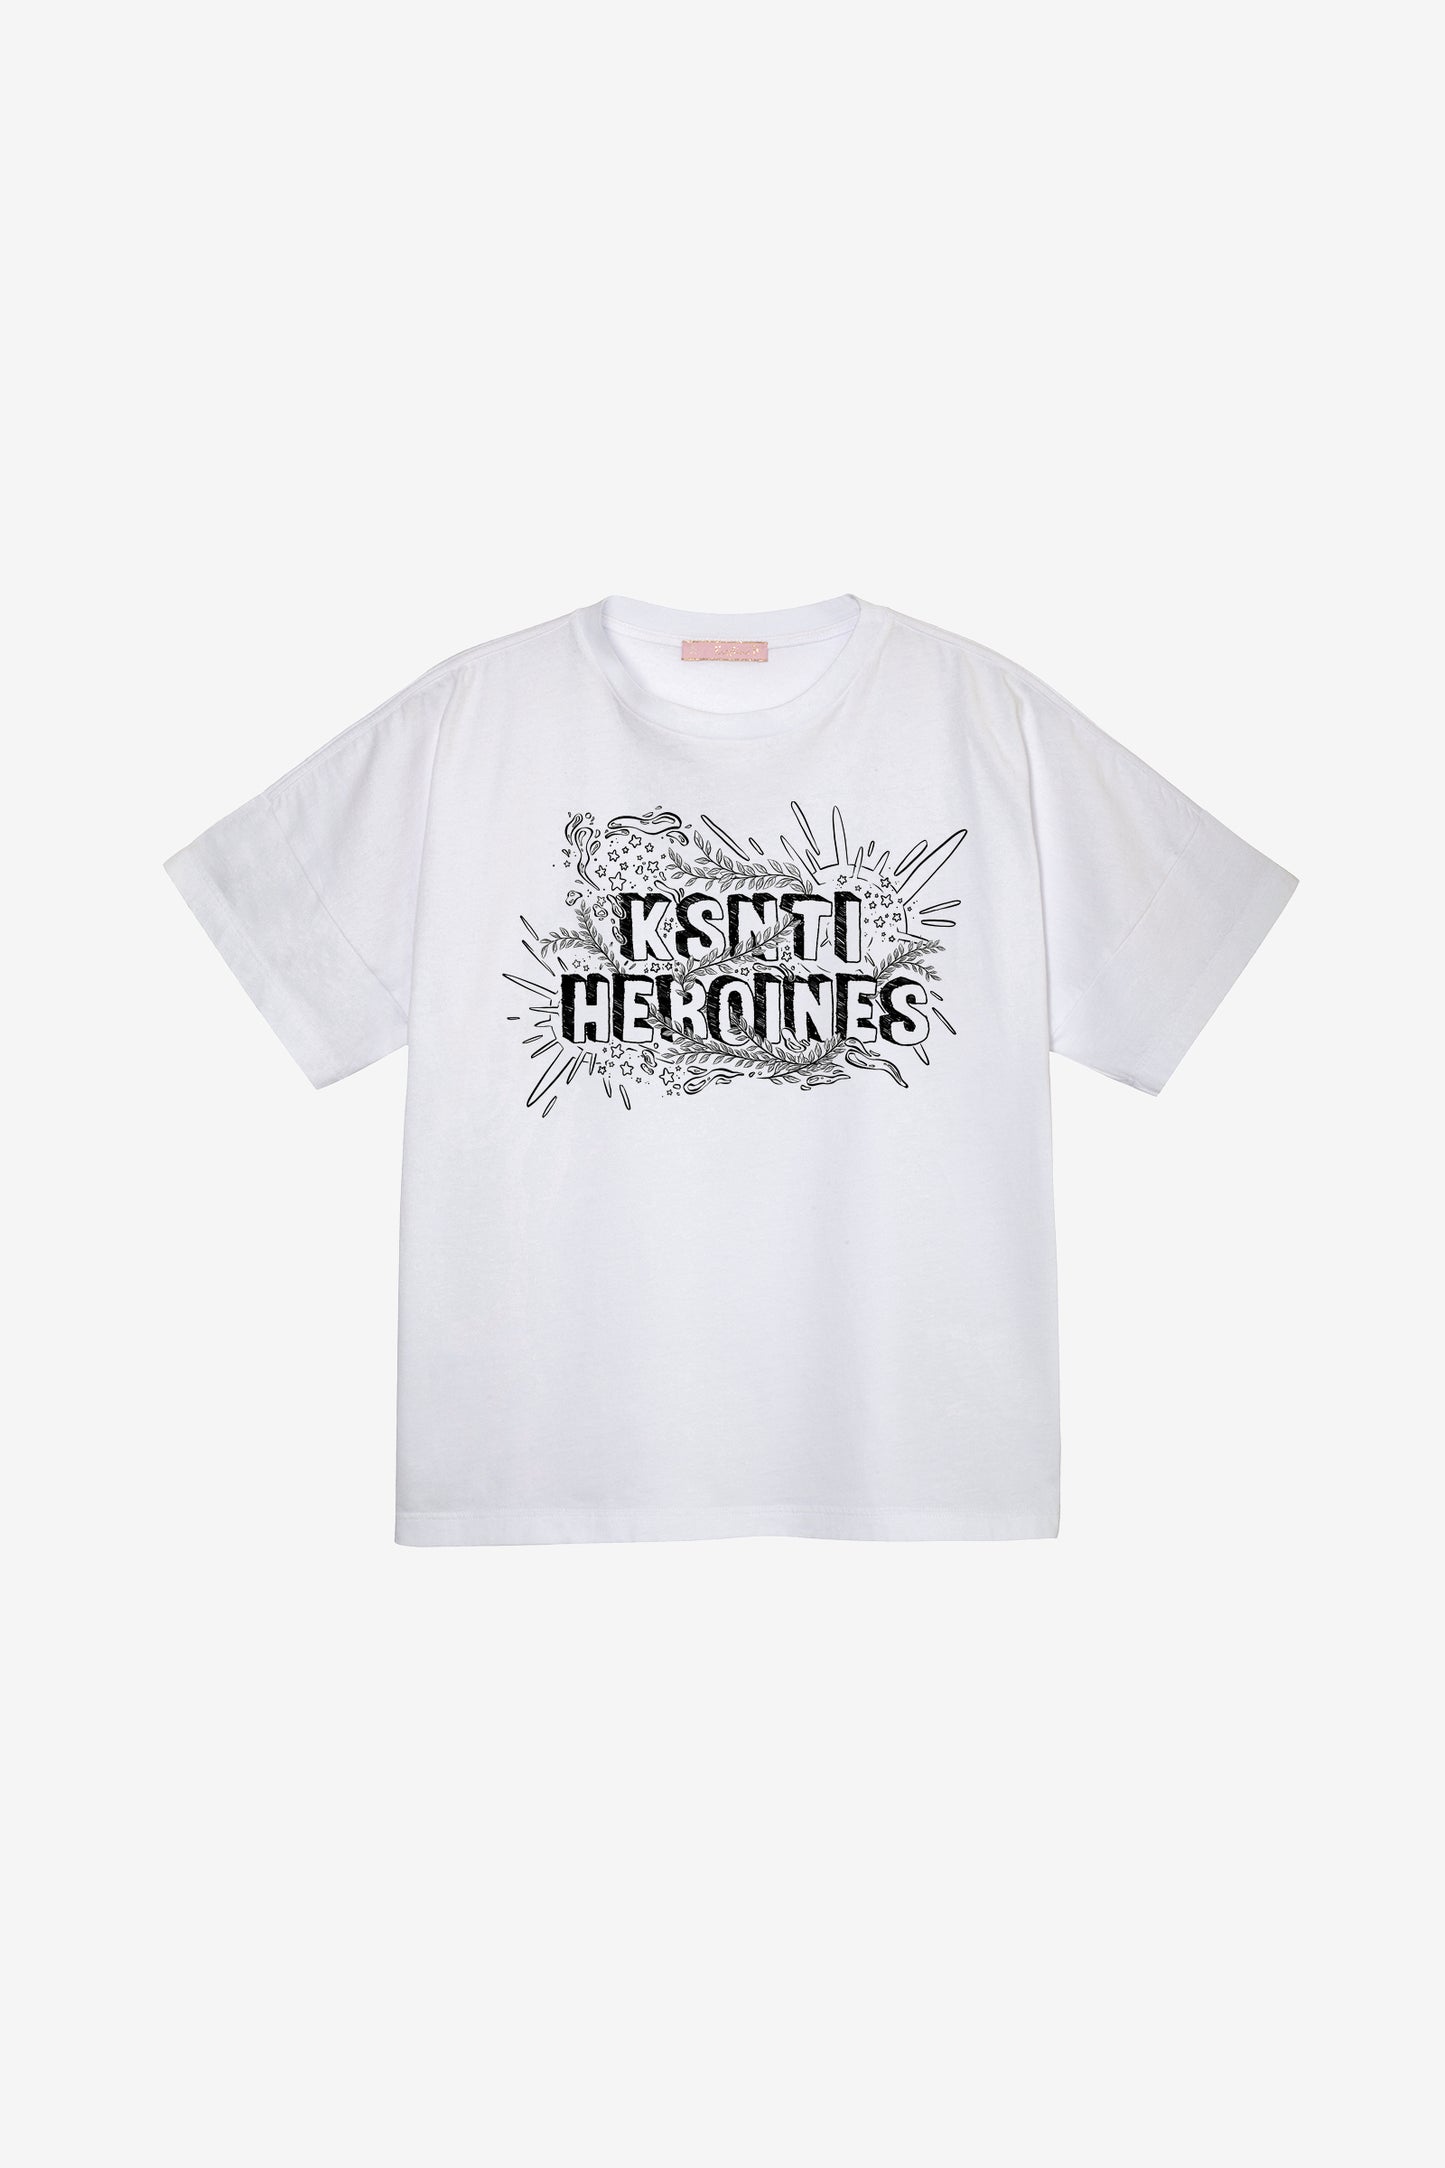 TERRY - T-shirt Heroines